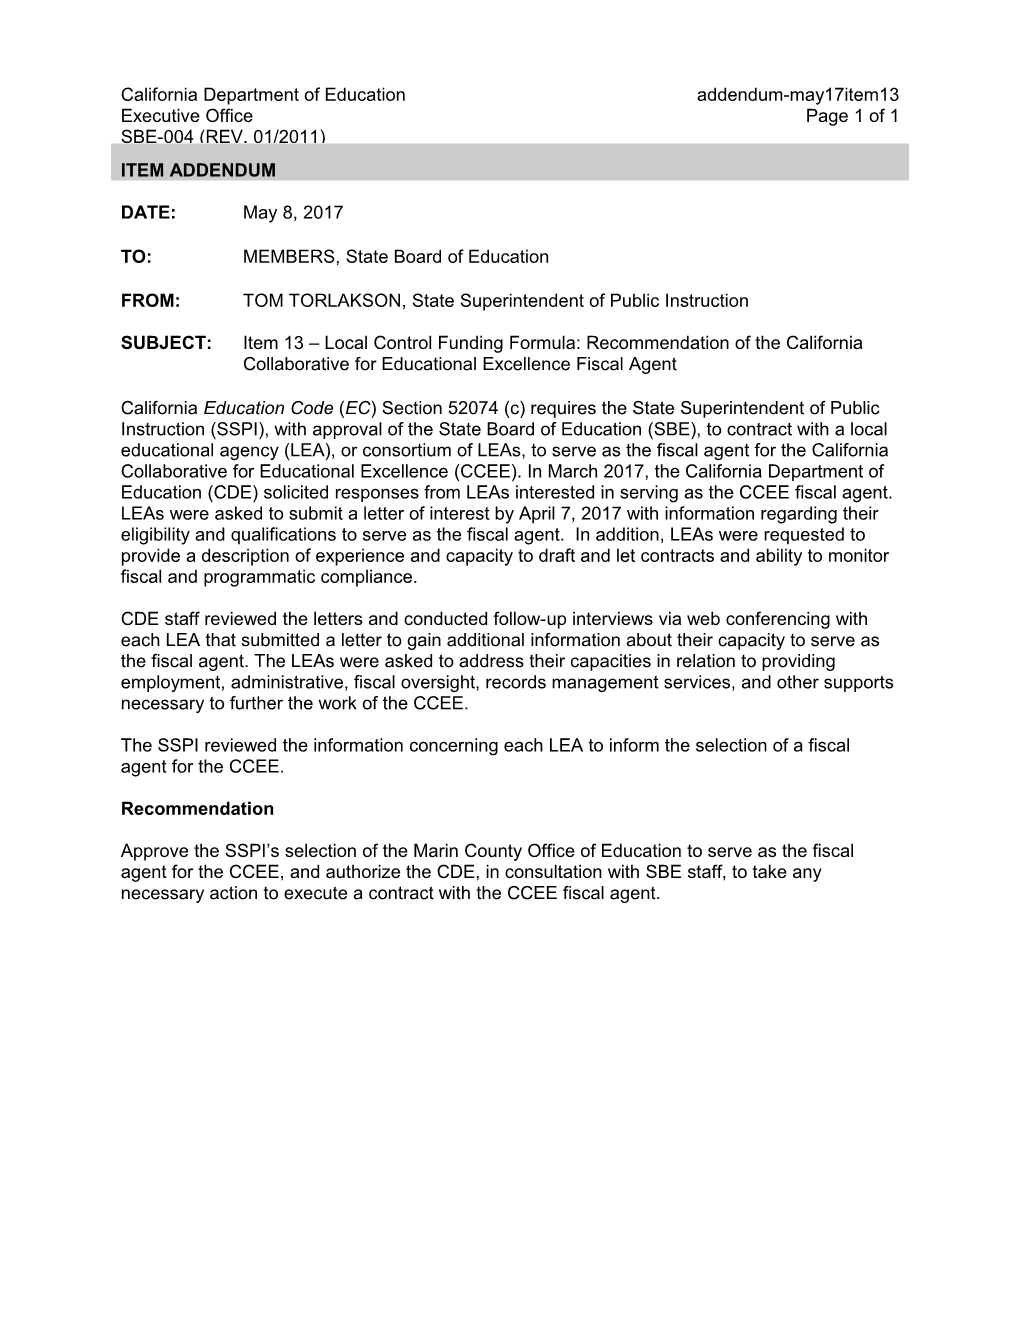 May 2017 Agenda Item 13 Addendum - Meeting Agendas (CA State Board of Education)